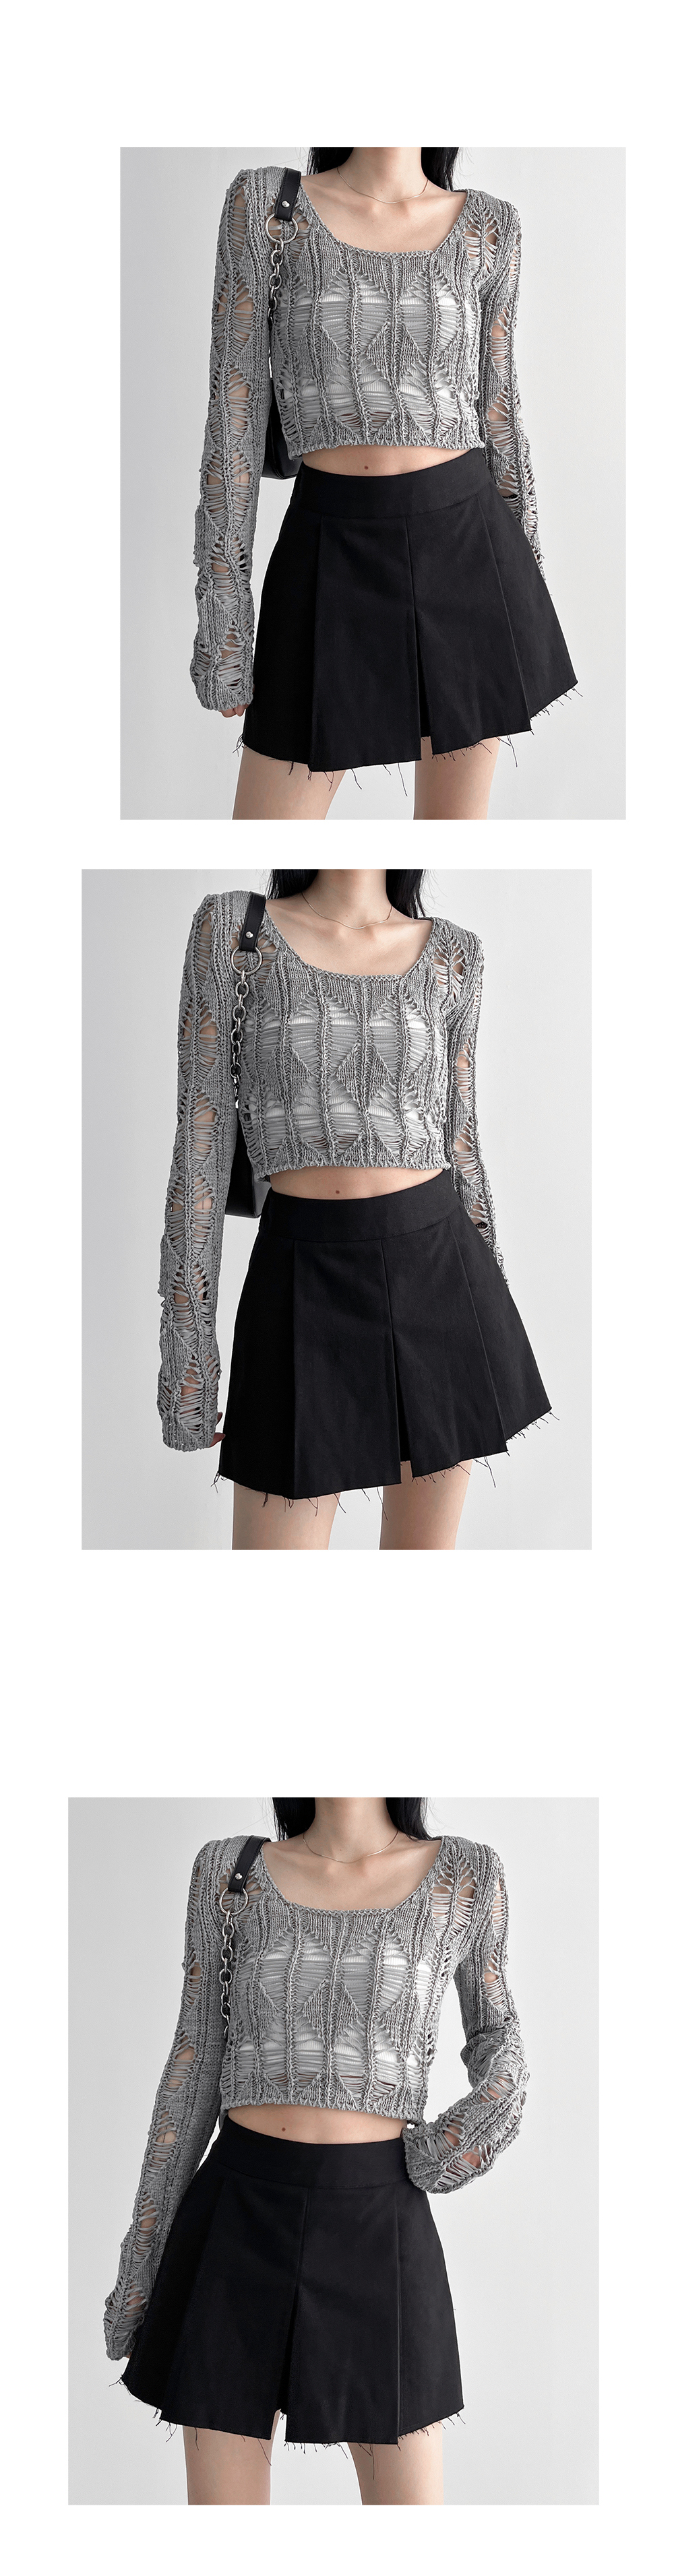 mini skirt charcoal color image-S1L8